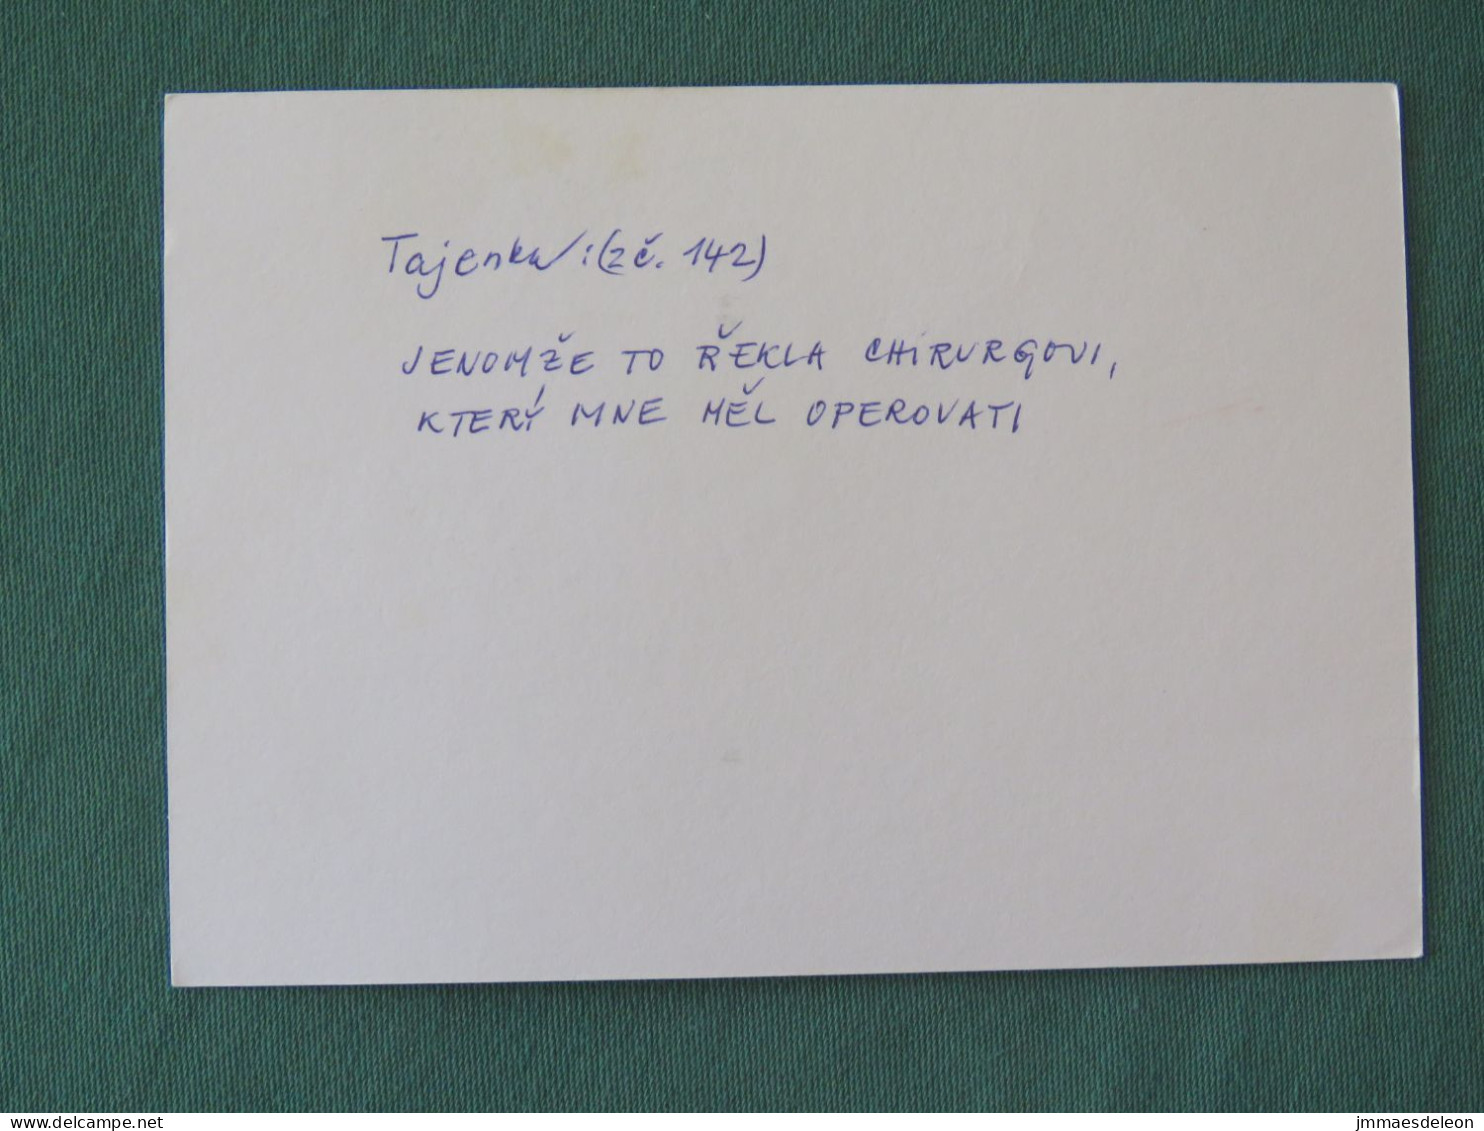 Czech Republic 1998 Stationery Postcard 4 Kcs "Prague 1998" Sent Locally - Lettres & Documents